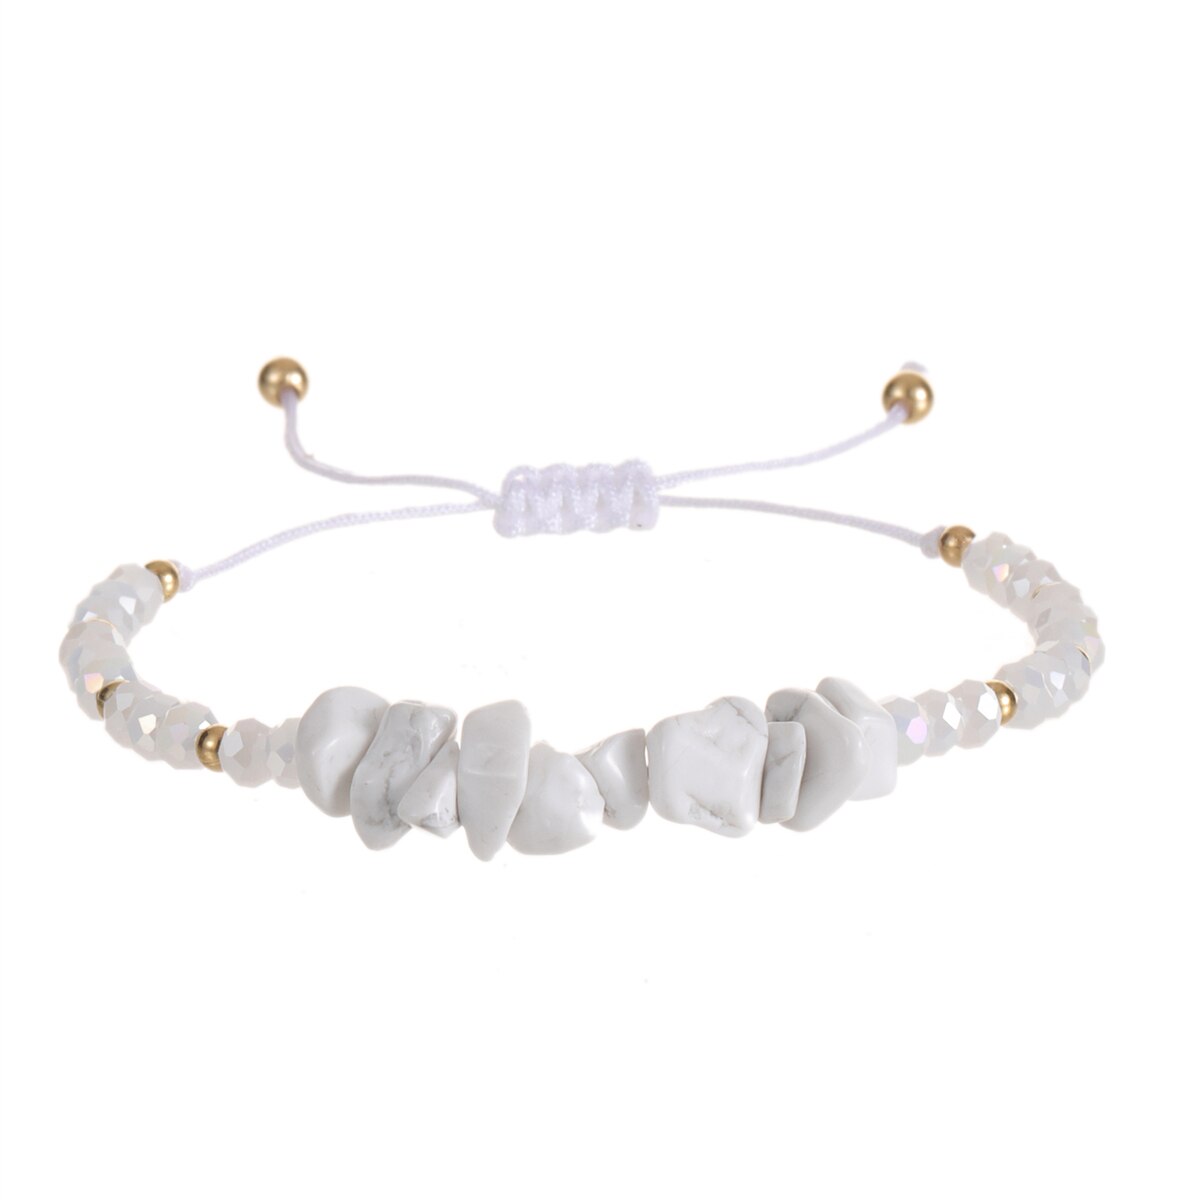 Natural Stone Amethyst Agate Charms Bracelet Women Men Boho Adjustable Hand Braided Chain Healing Yoga Jewelry